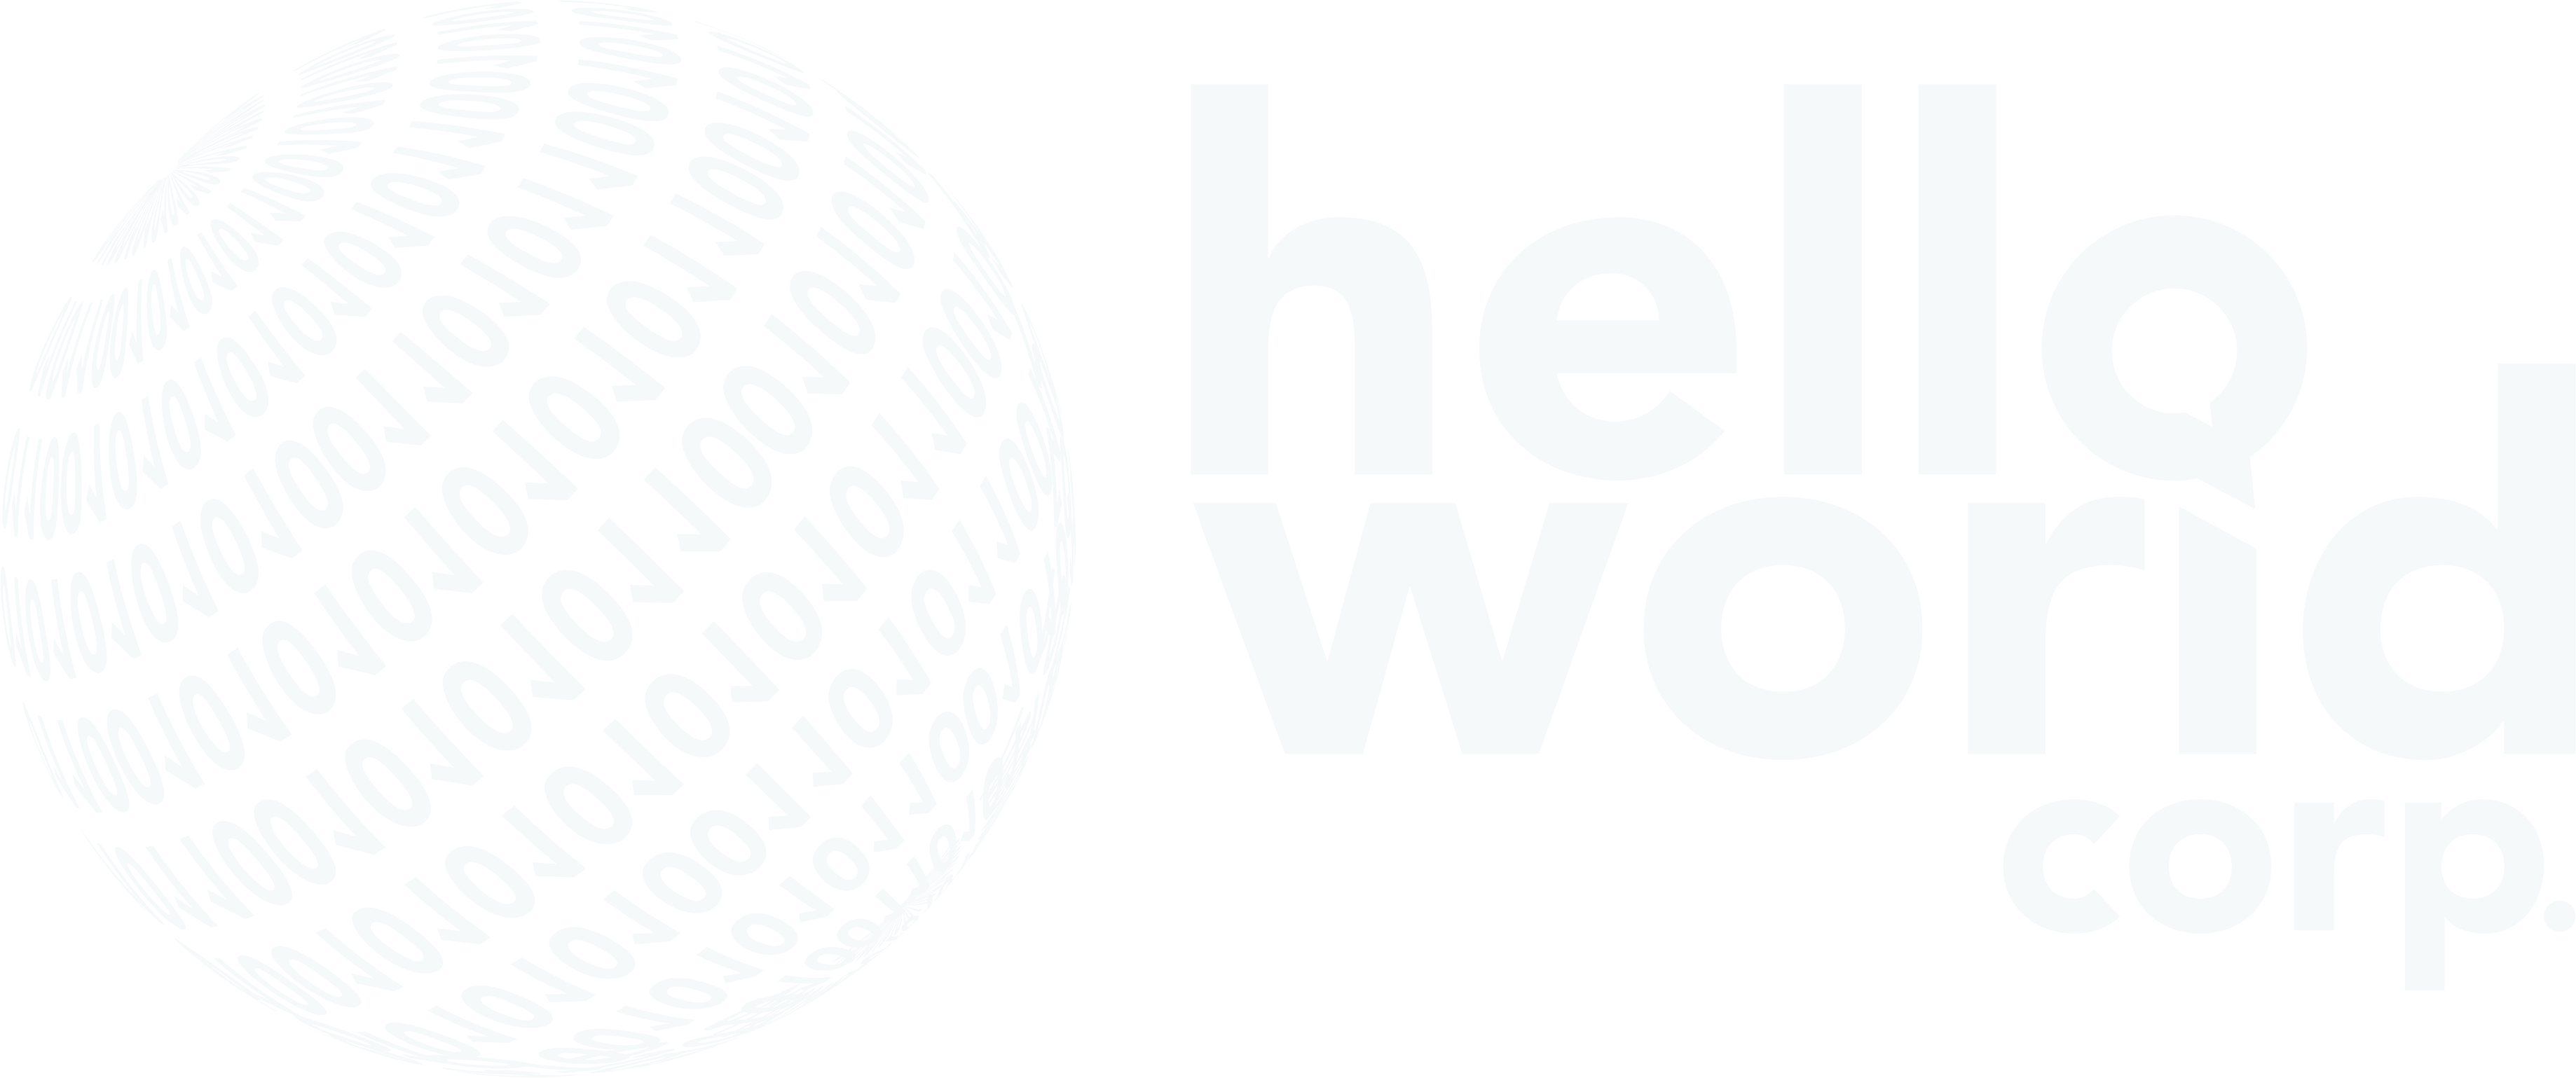 Hello World Corp